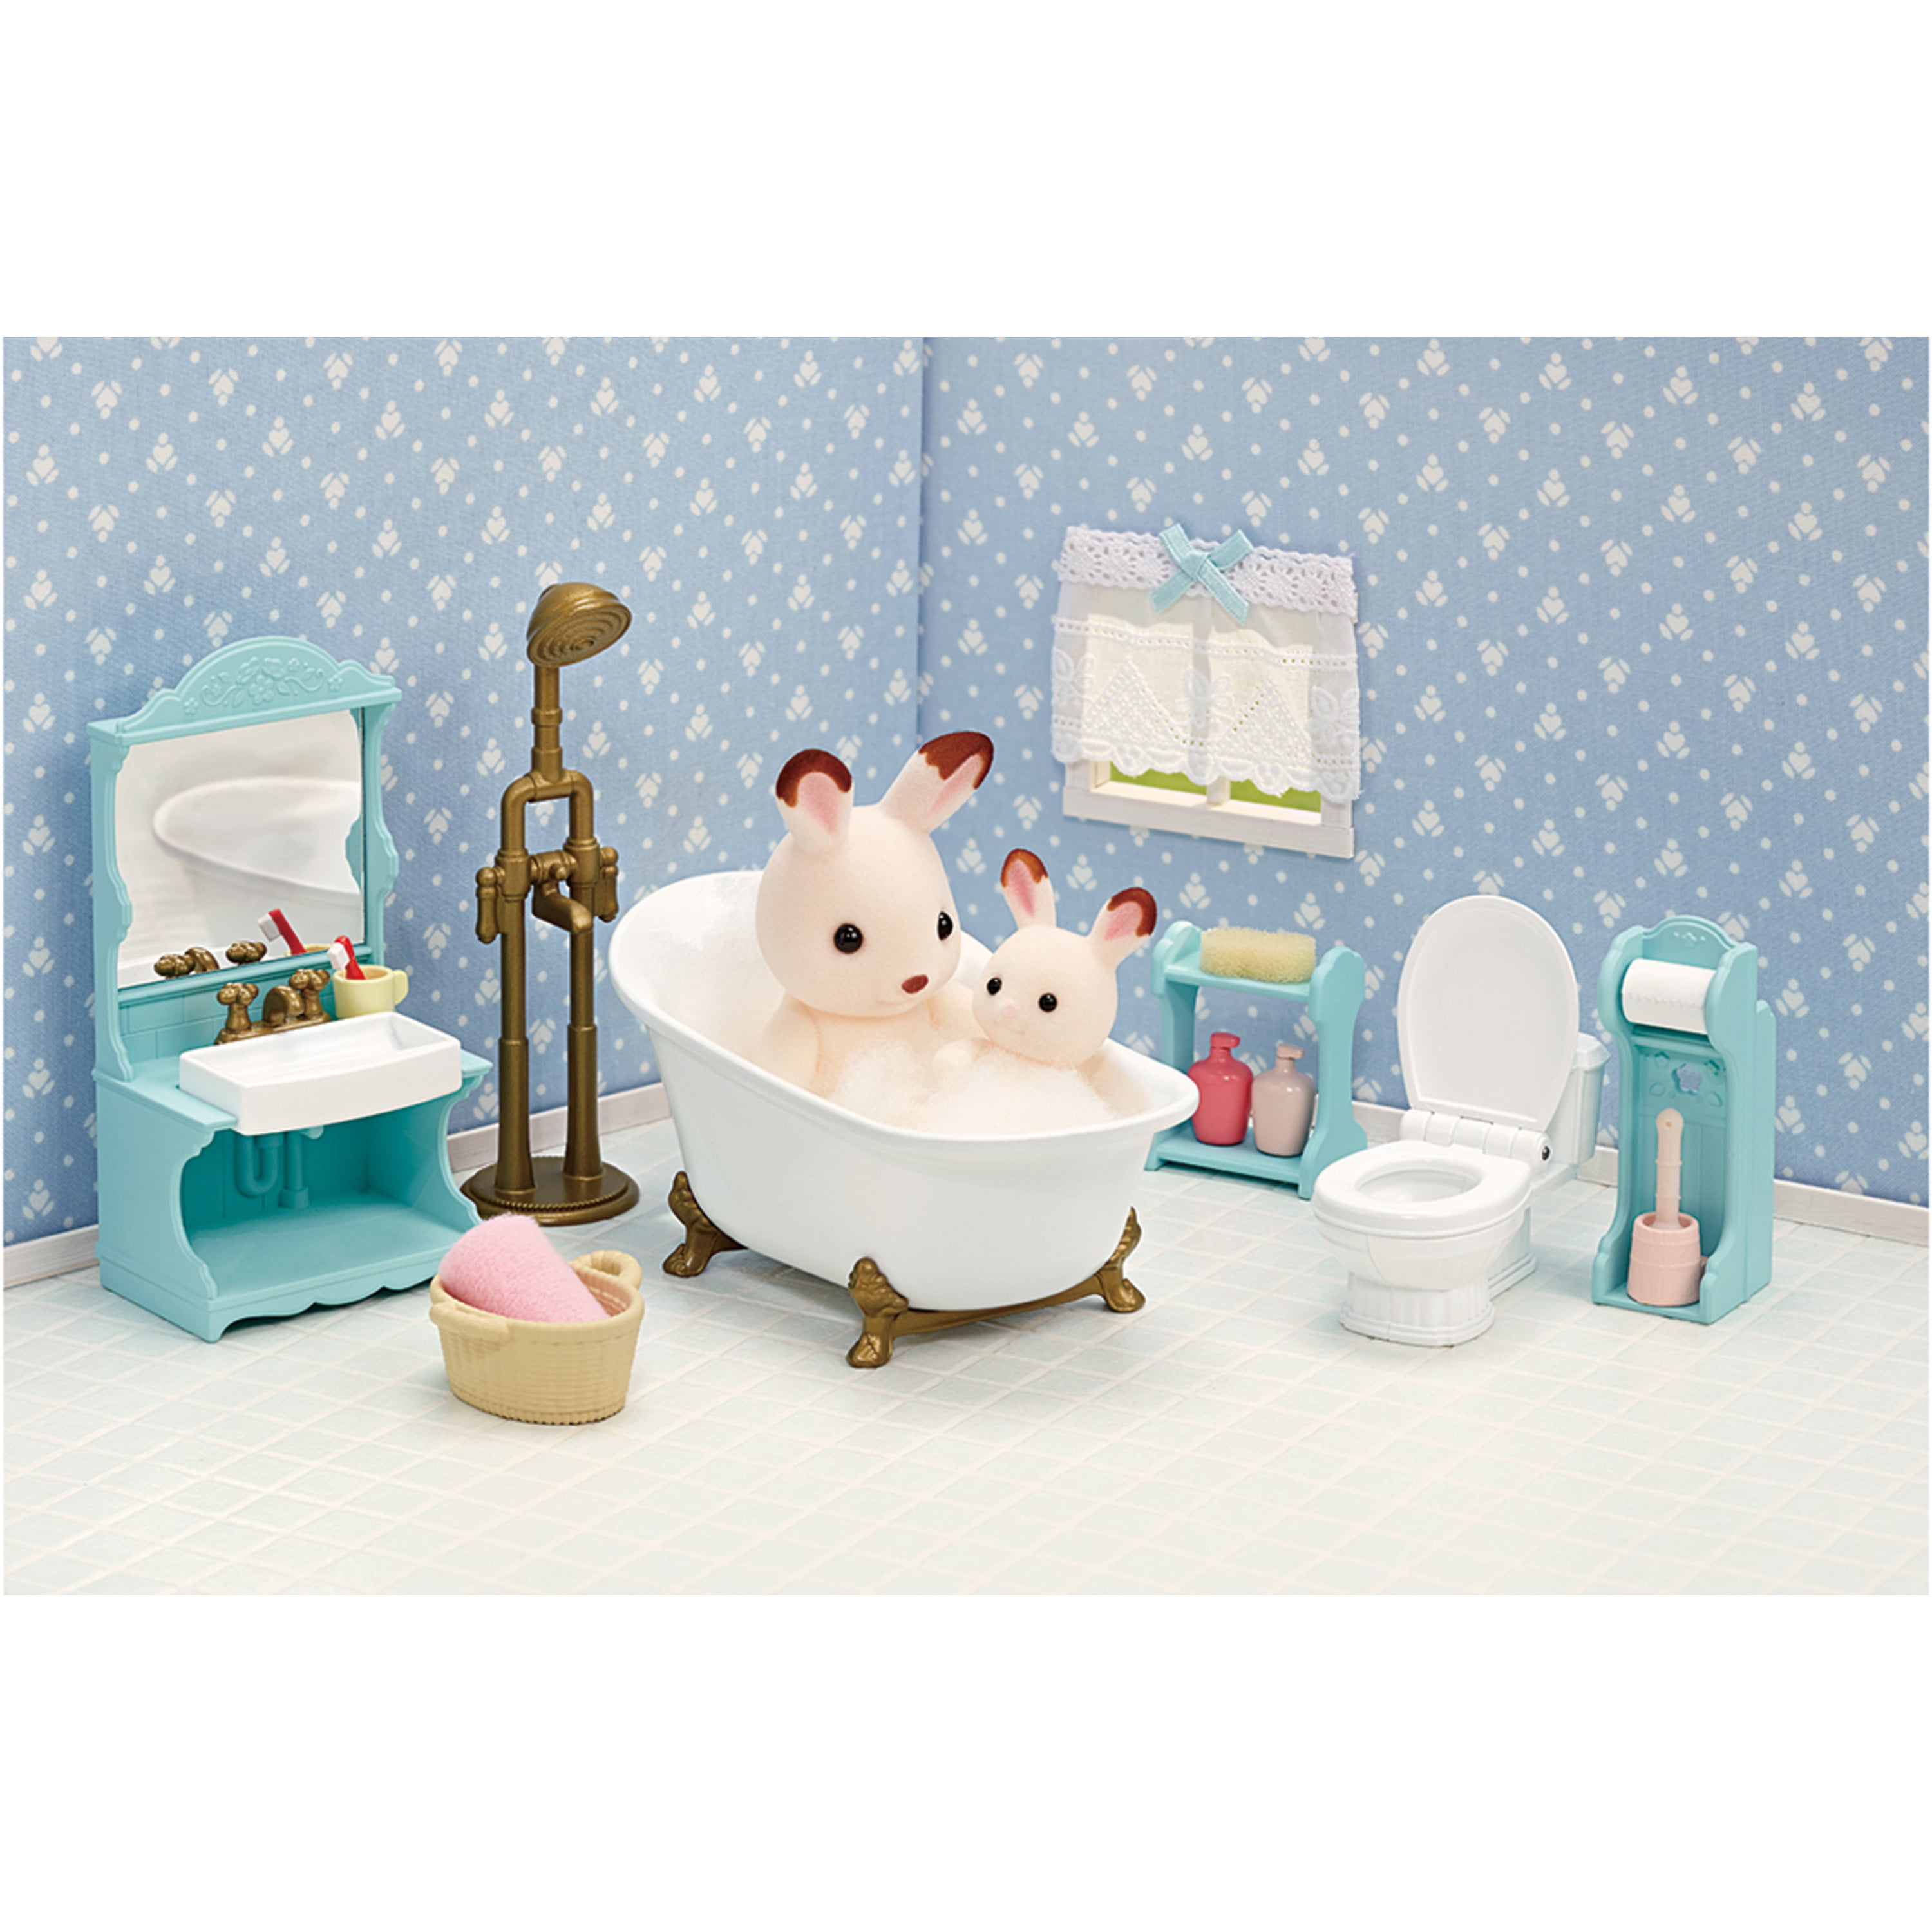 ya08392 Sylvanian Families/Calico Critters Bath Room set Se-151 